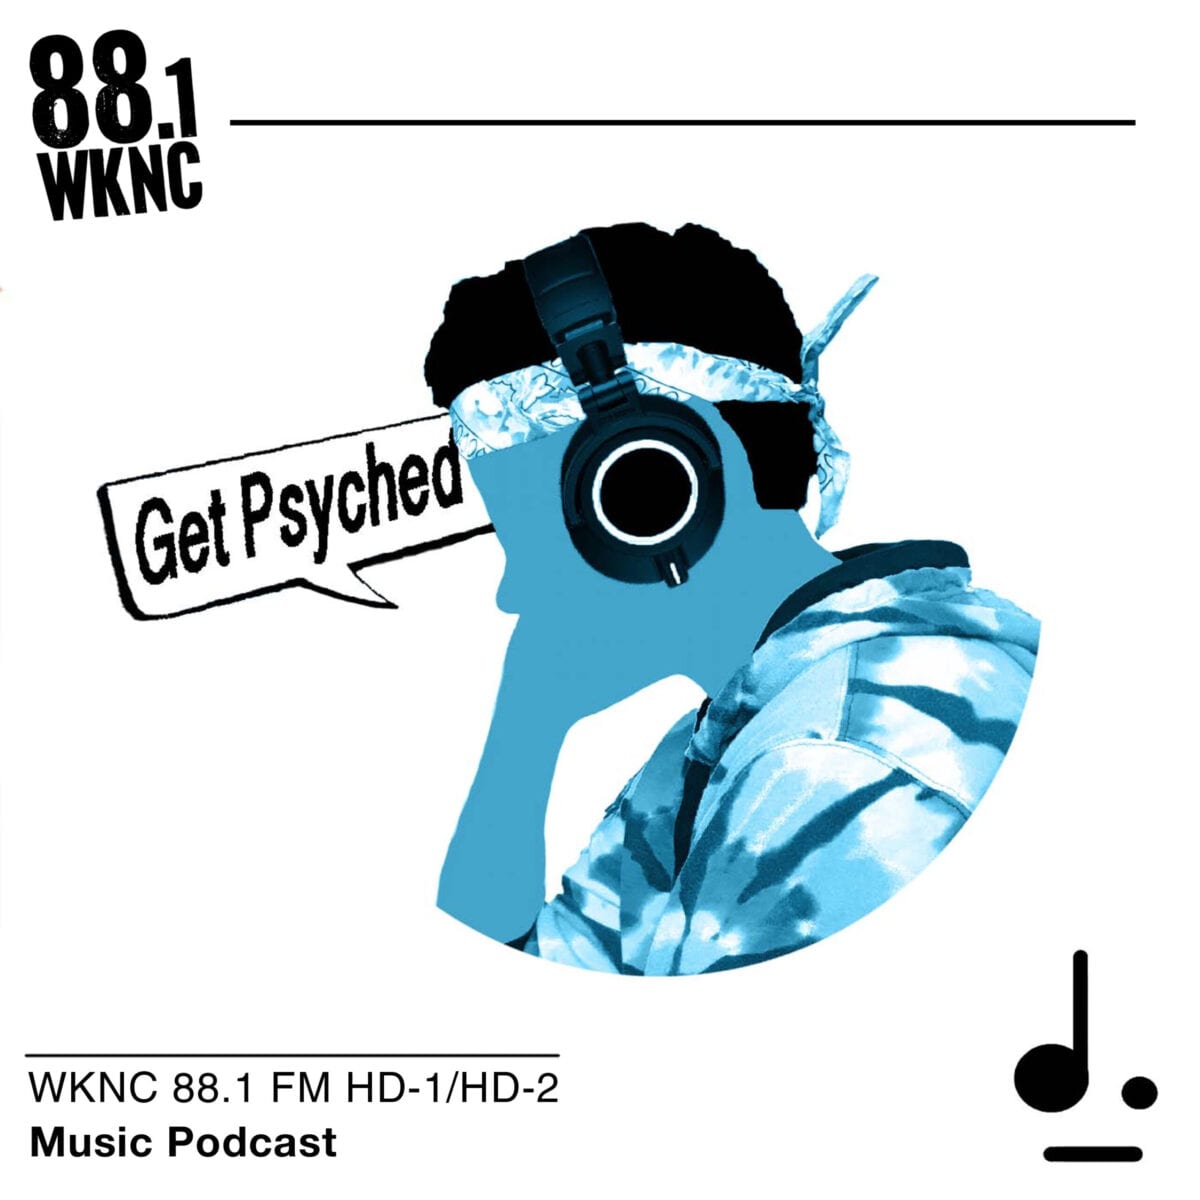 Get Psyched WKNC 88.1 FM HD-1/HD-2 music podcast